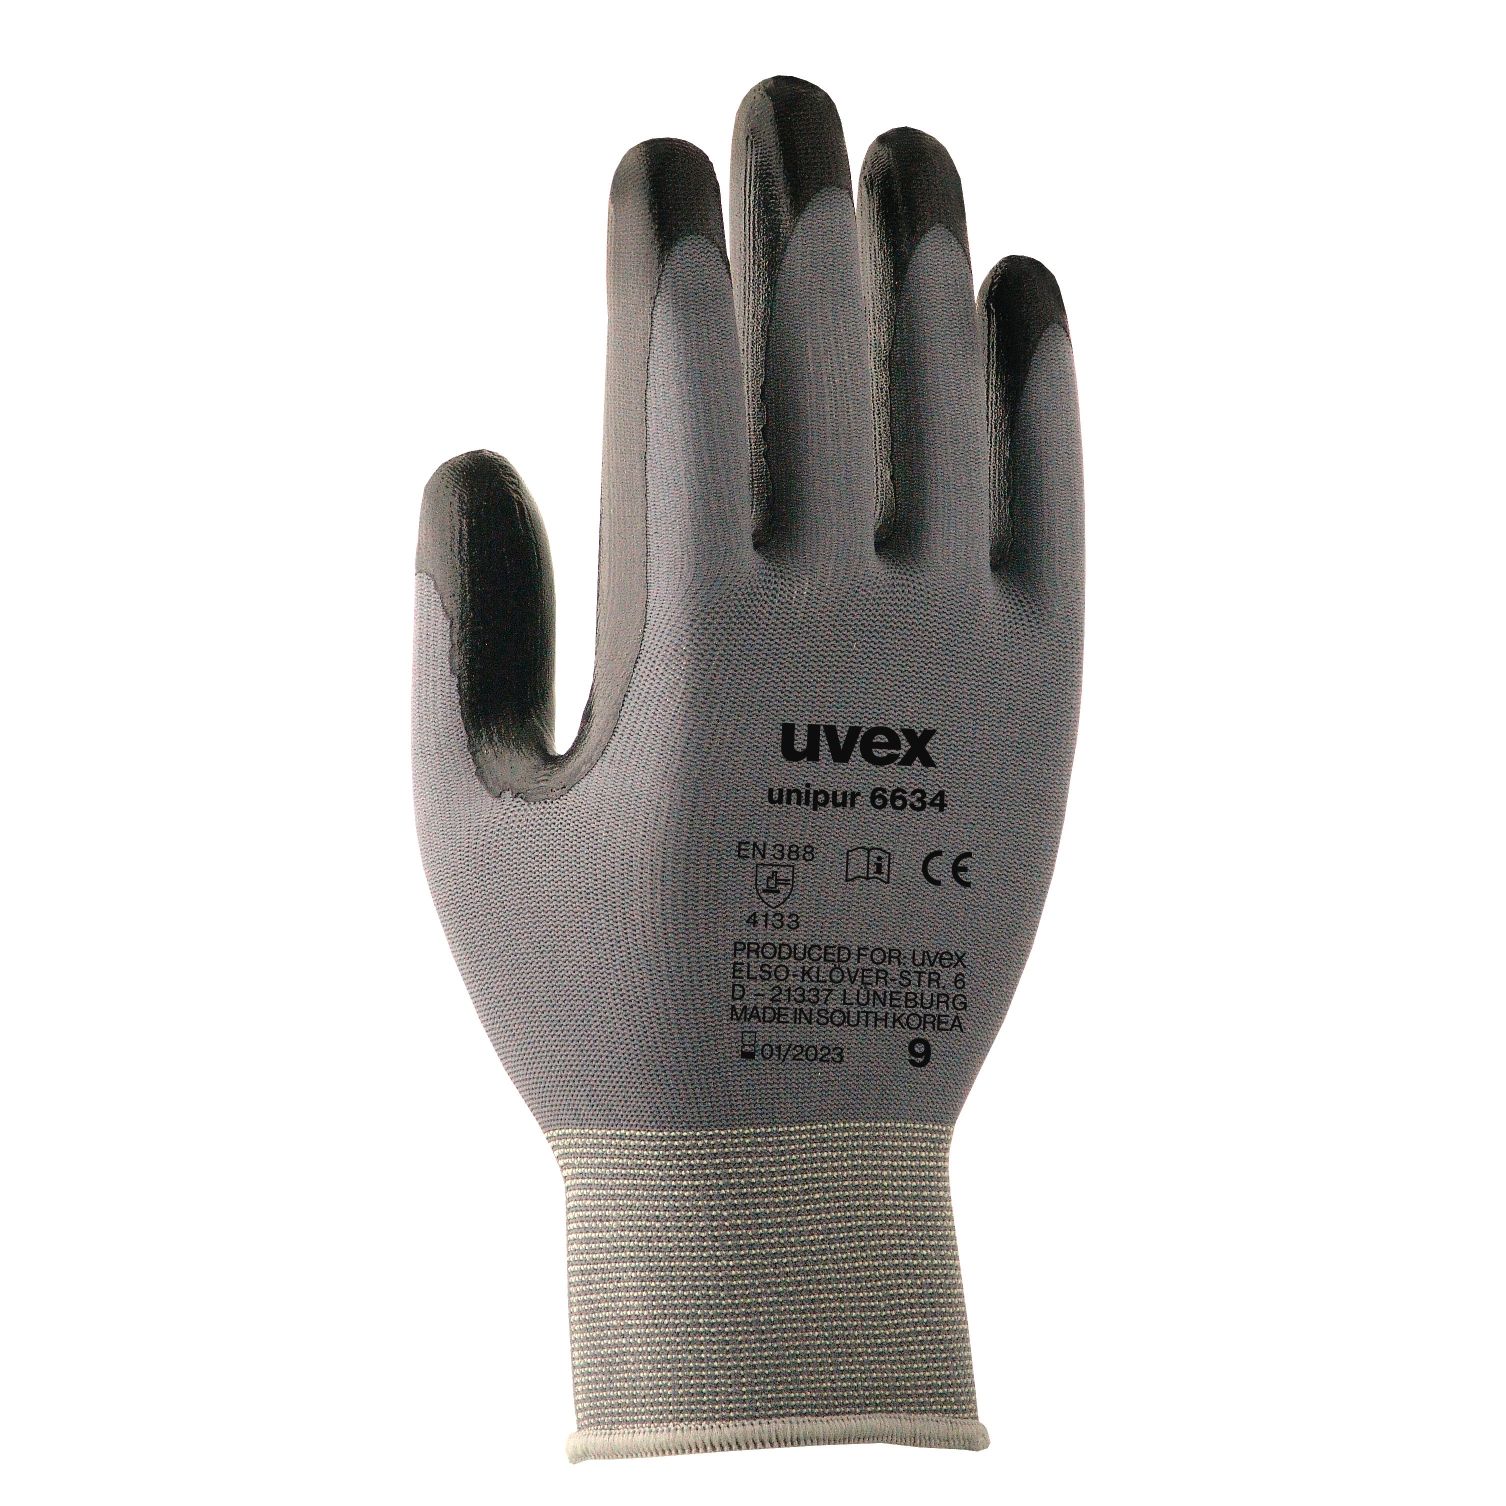 uvex Unipur 6634 Safety Gloves - Grey - X Large (10)